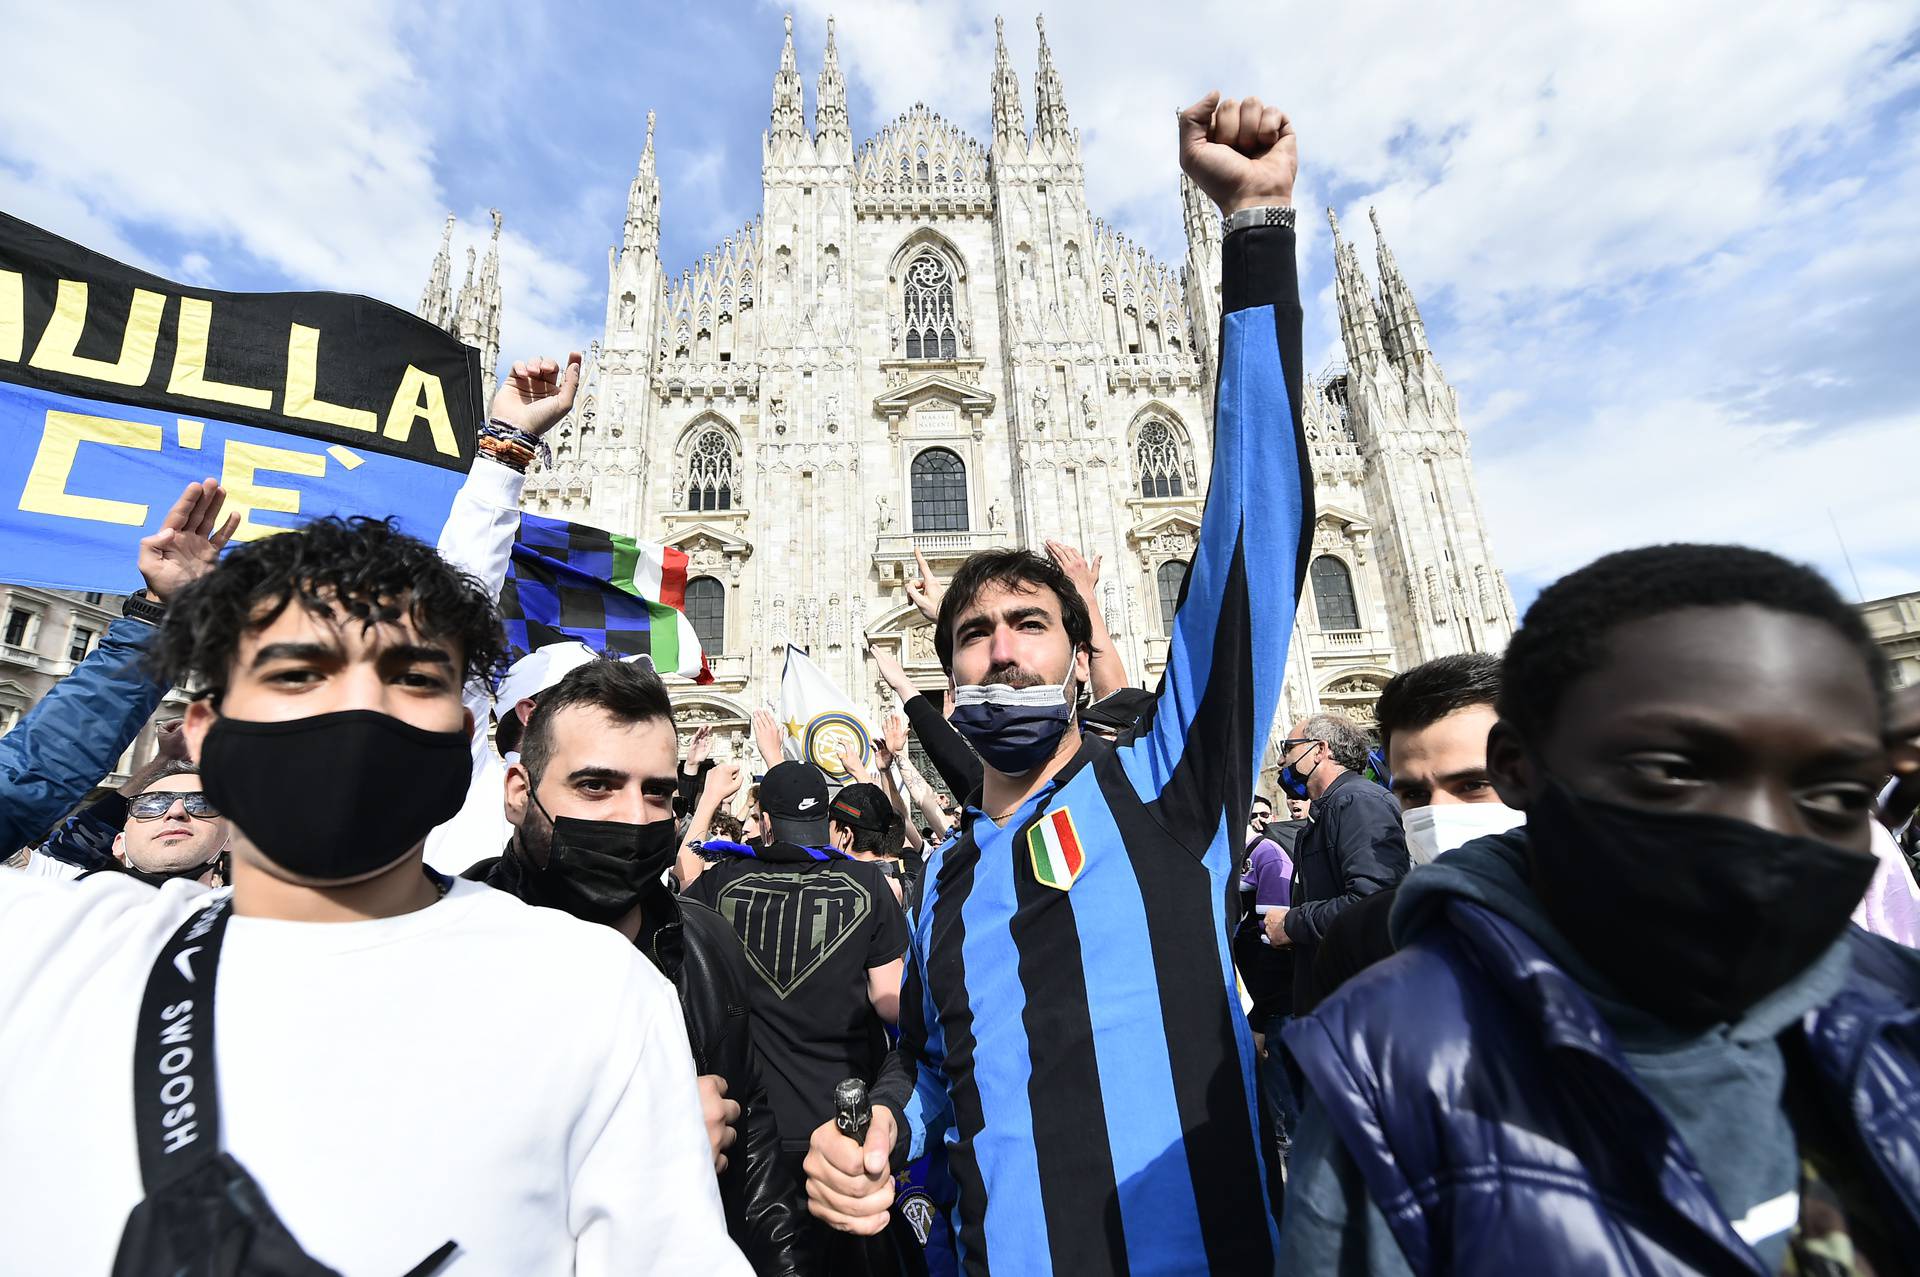 Serie A - Inter Milan fans celebrate winning Serie A